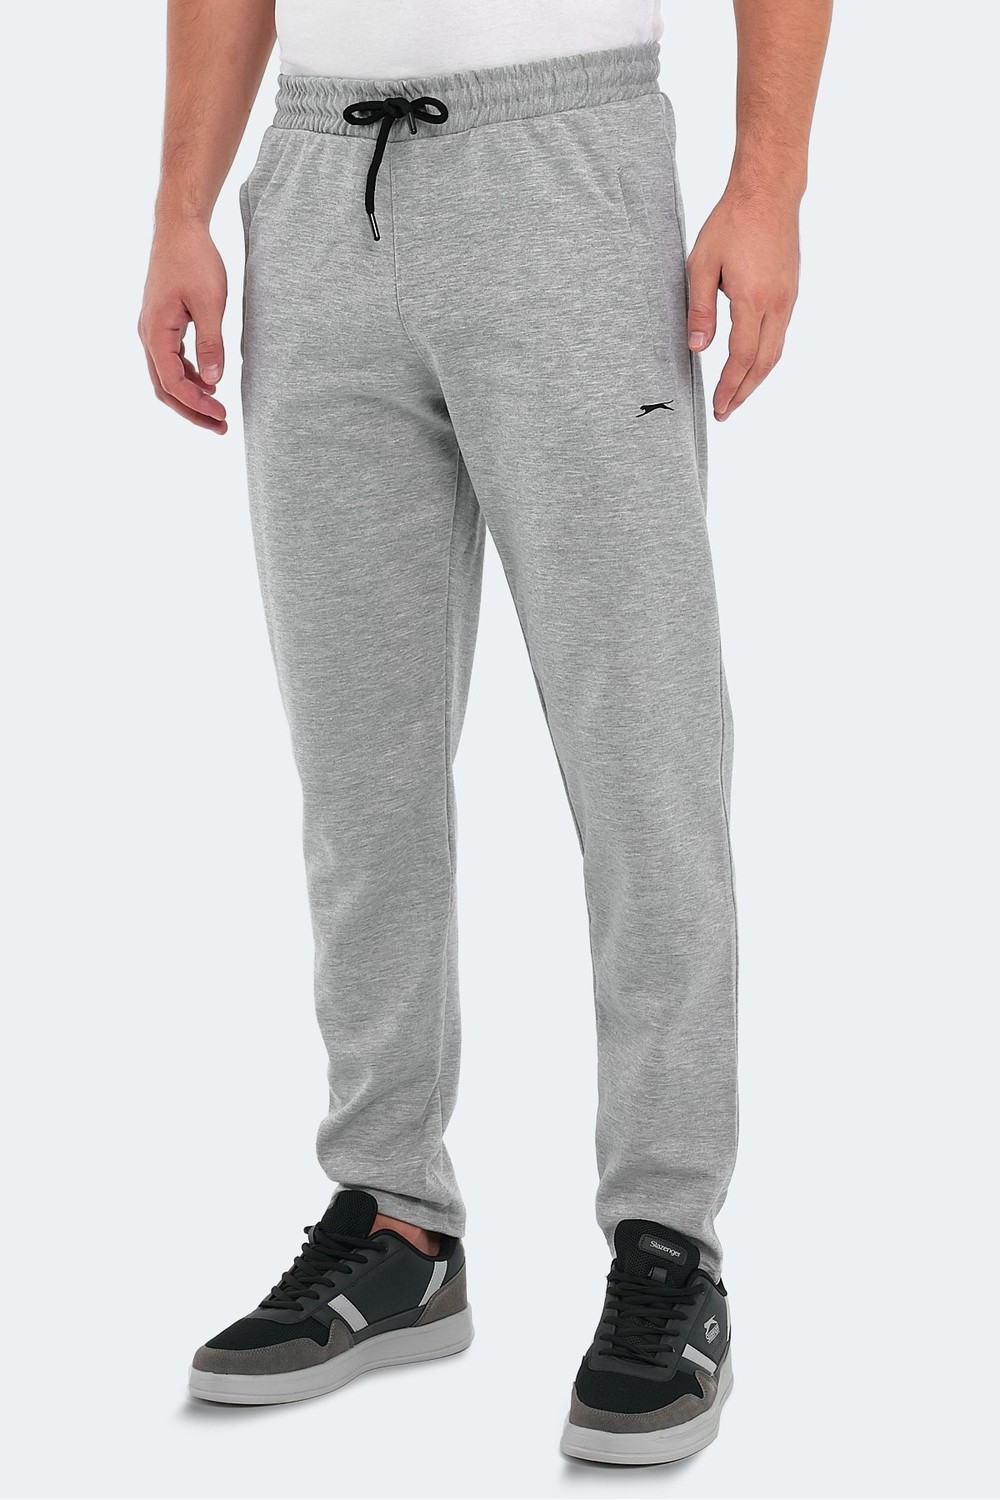 Slazenger ONYEKA Men's Sweatpants Gray